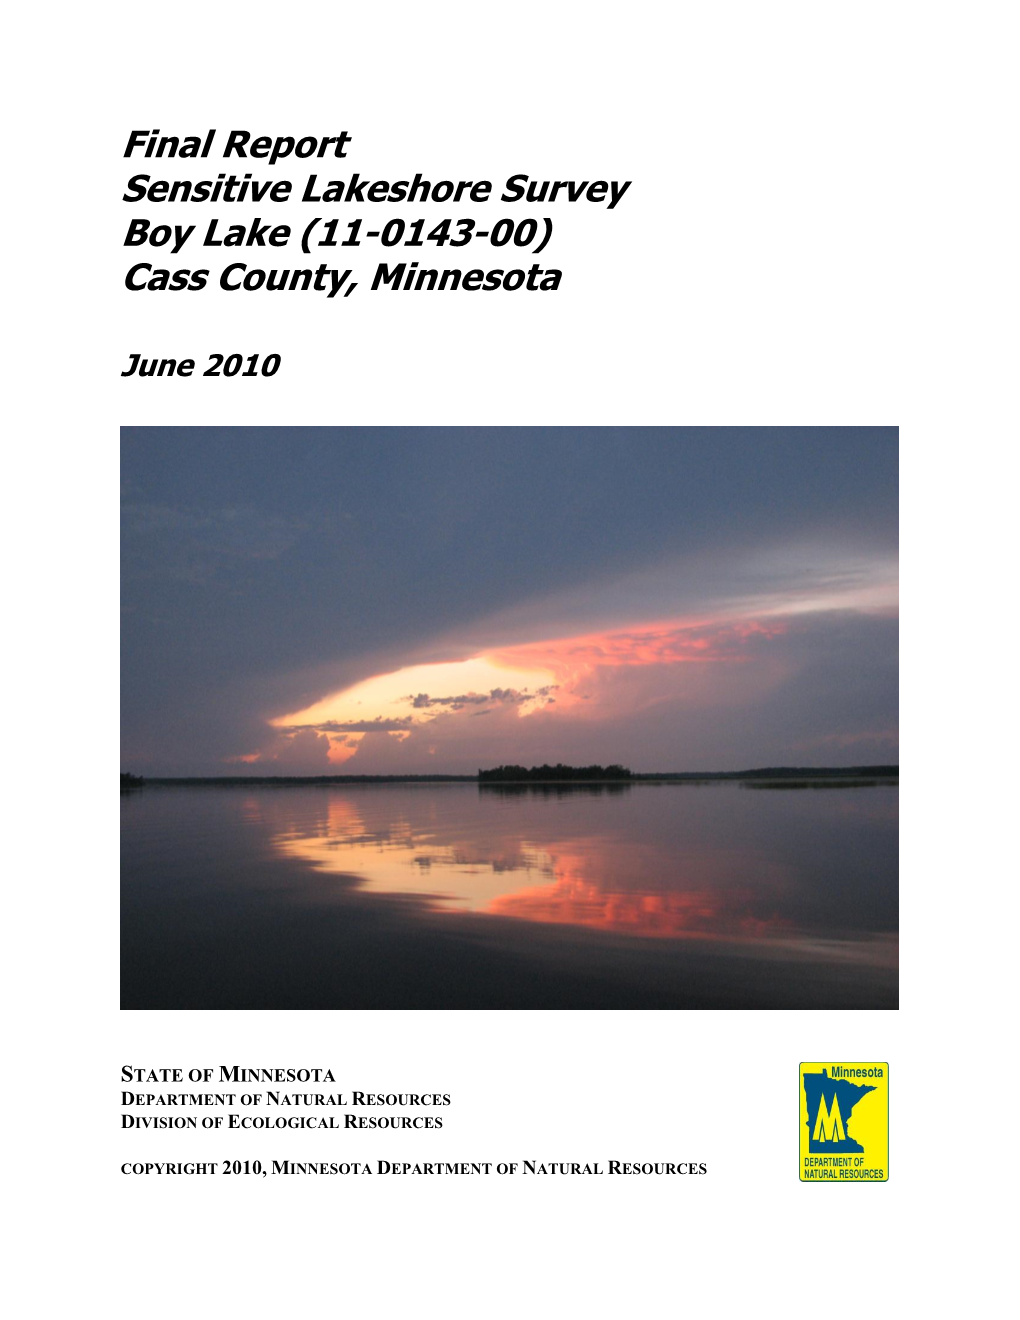 Final Report Sensitive Lakeshore Survey Boy Lake (11-0143-00) Cass County, Minnesota